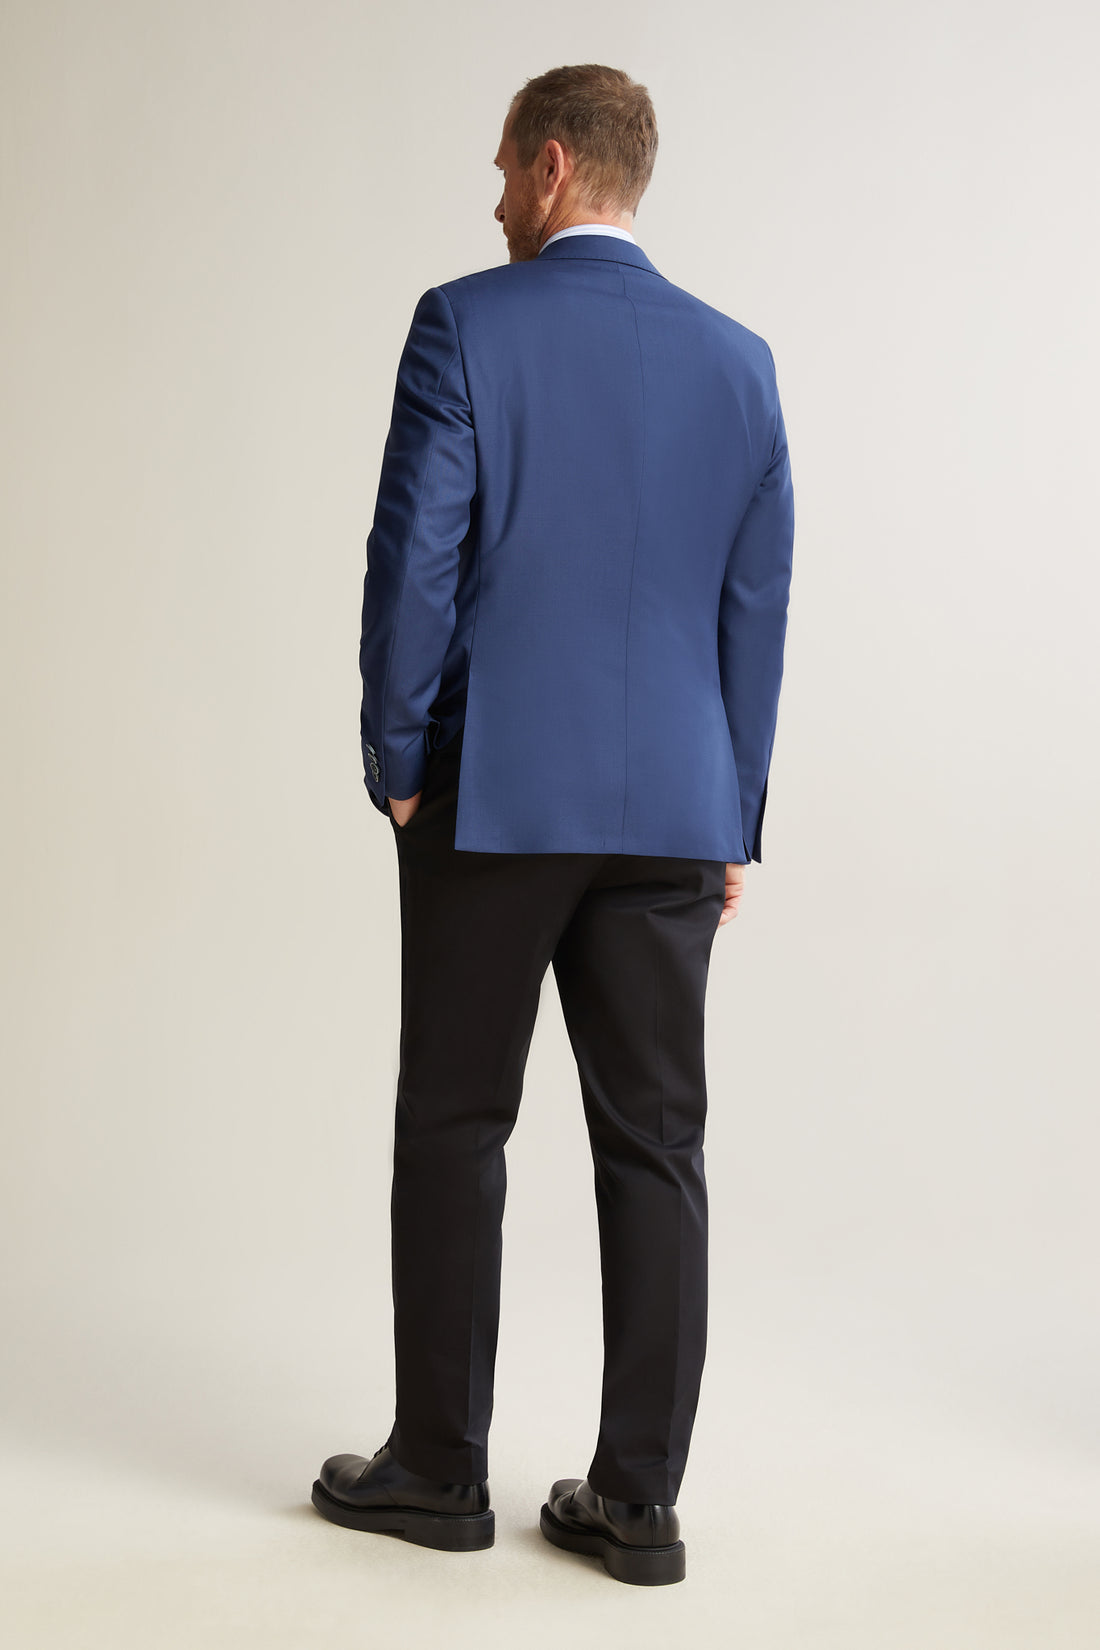 Blue Textured High Performance Jacket